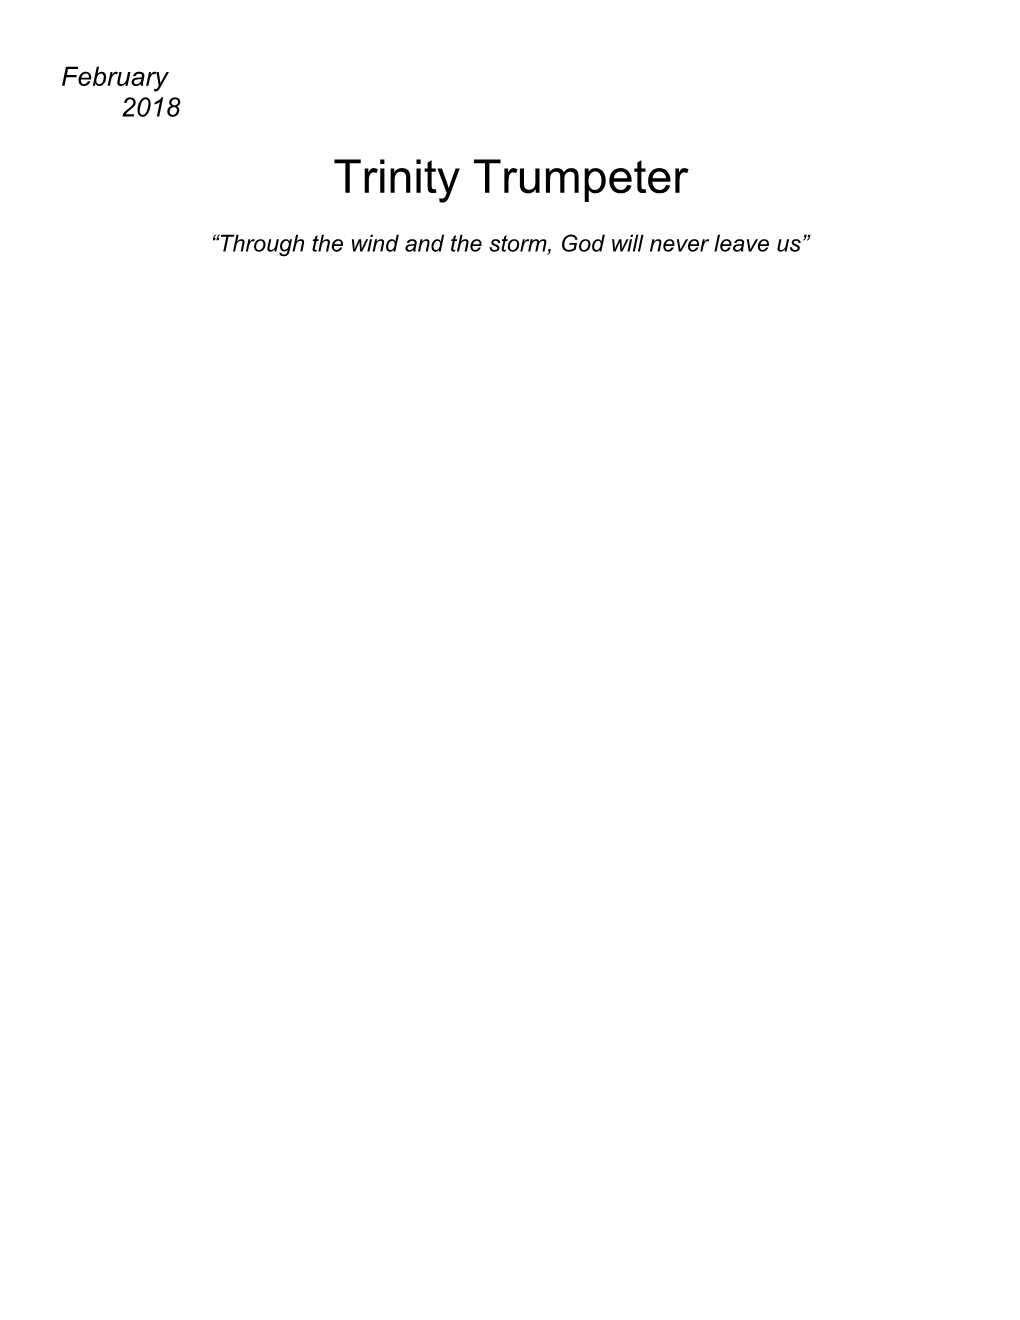 Trinity Trumpeter